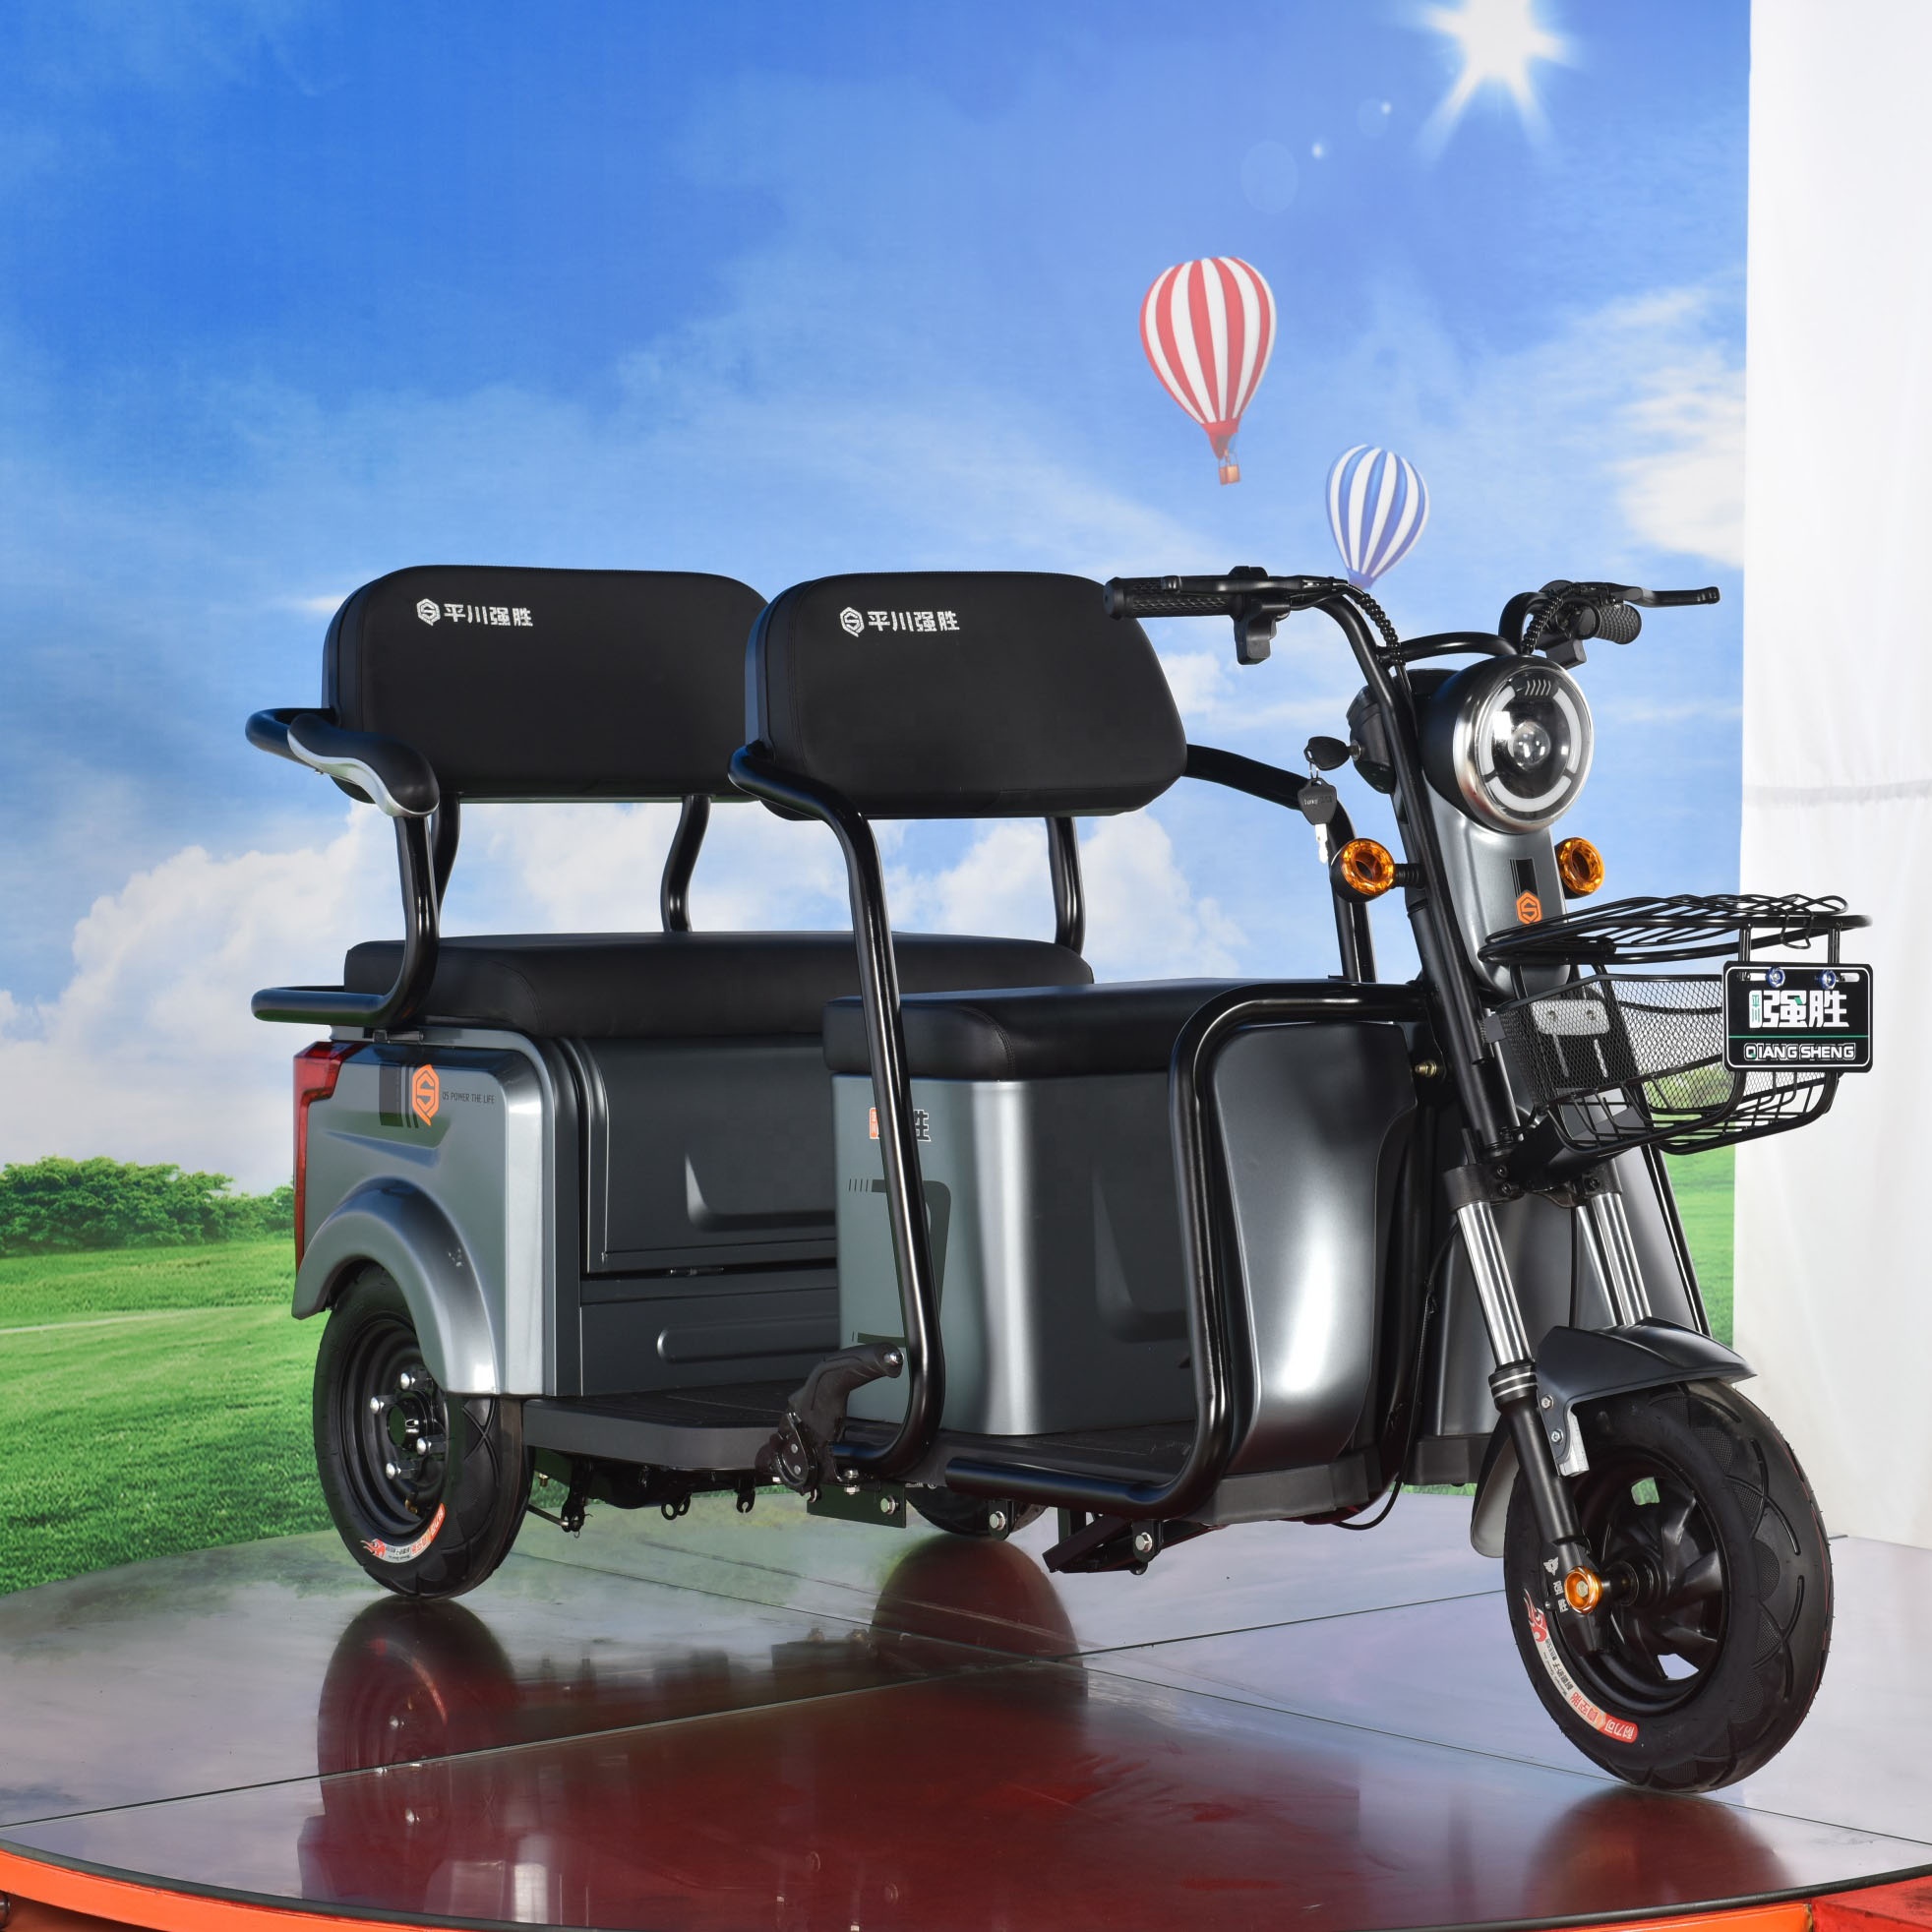 China Wholesale Three Wheeled Vehicles Factories - Three wheel electric scooter mini metro e rickshaw small 3 wheel car – Qiangsheng